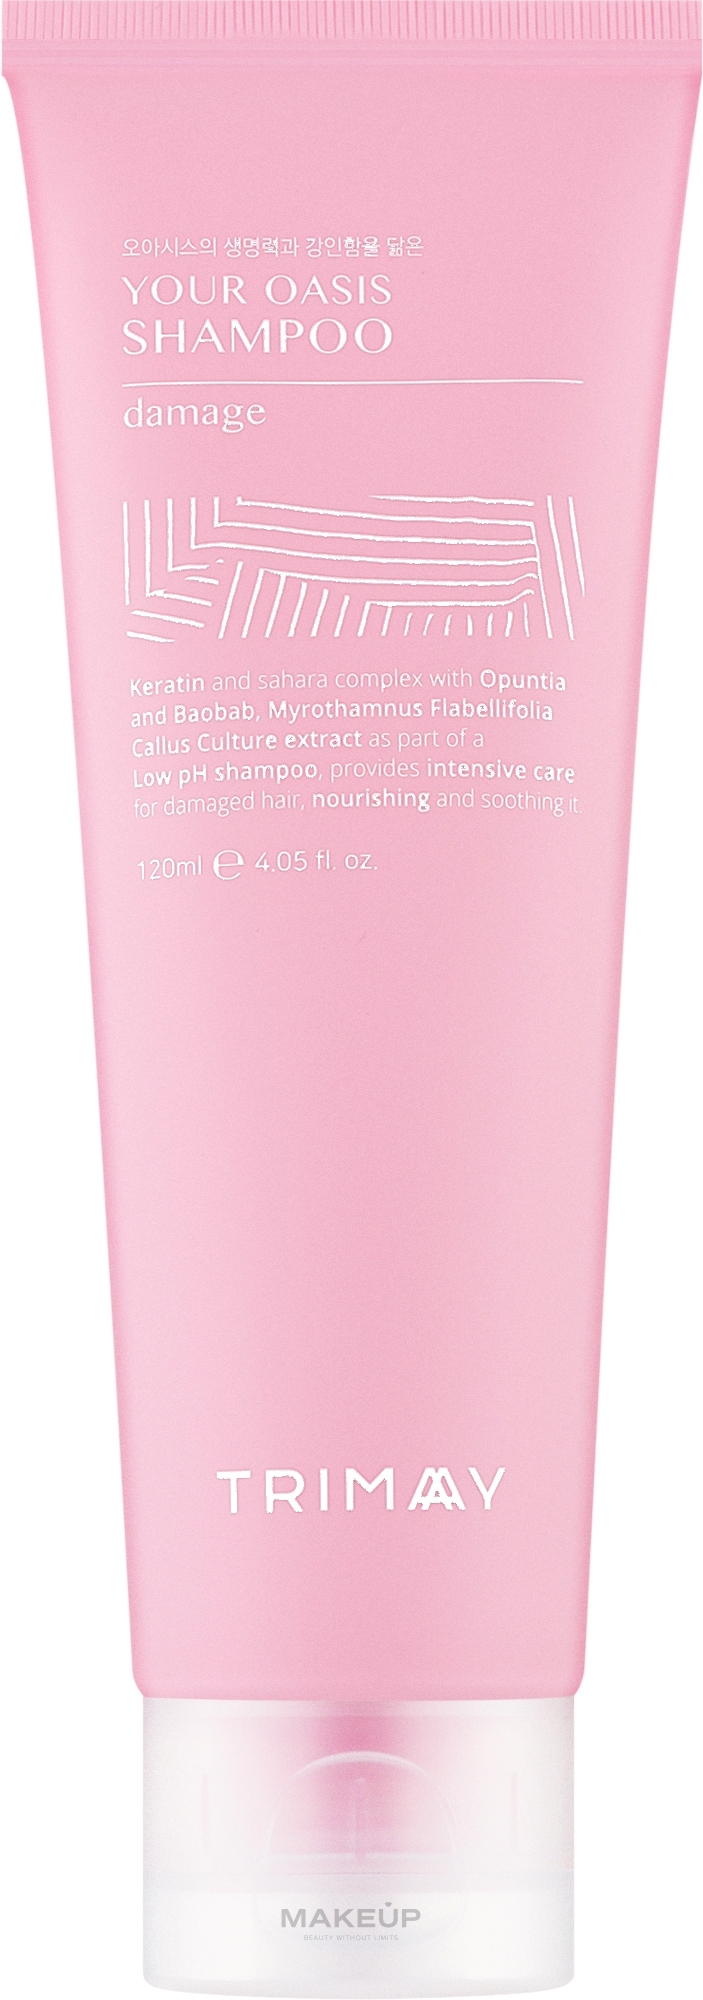 Безсульфатний кератиновий шампунь для волосся - Trimay Your Oasis Shampoo Damage Keratin — фото 120ml